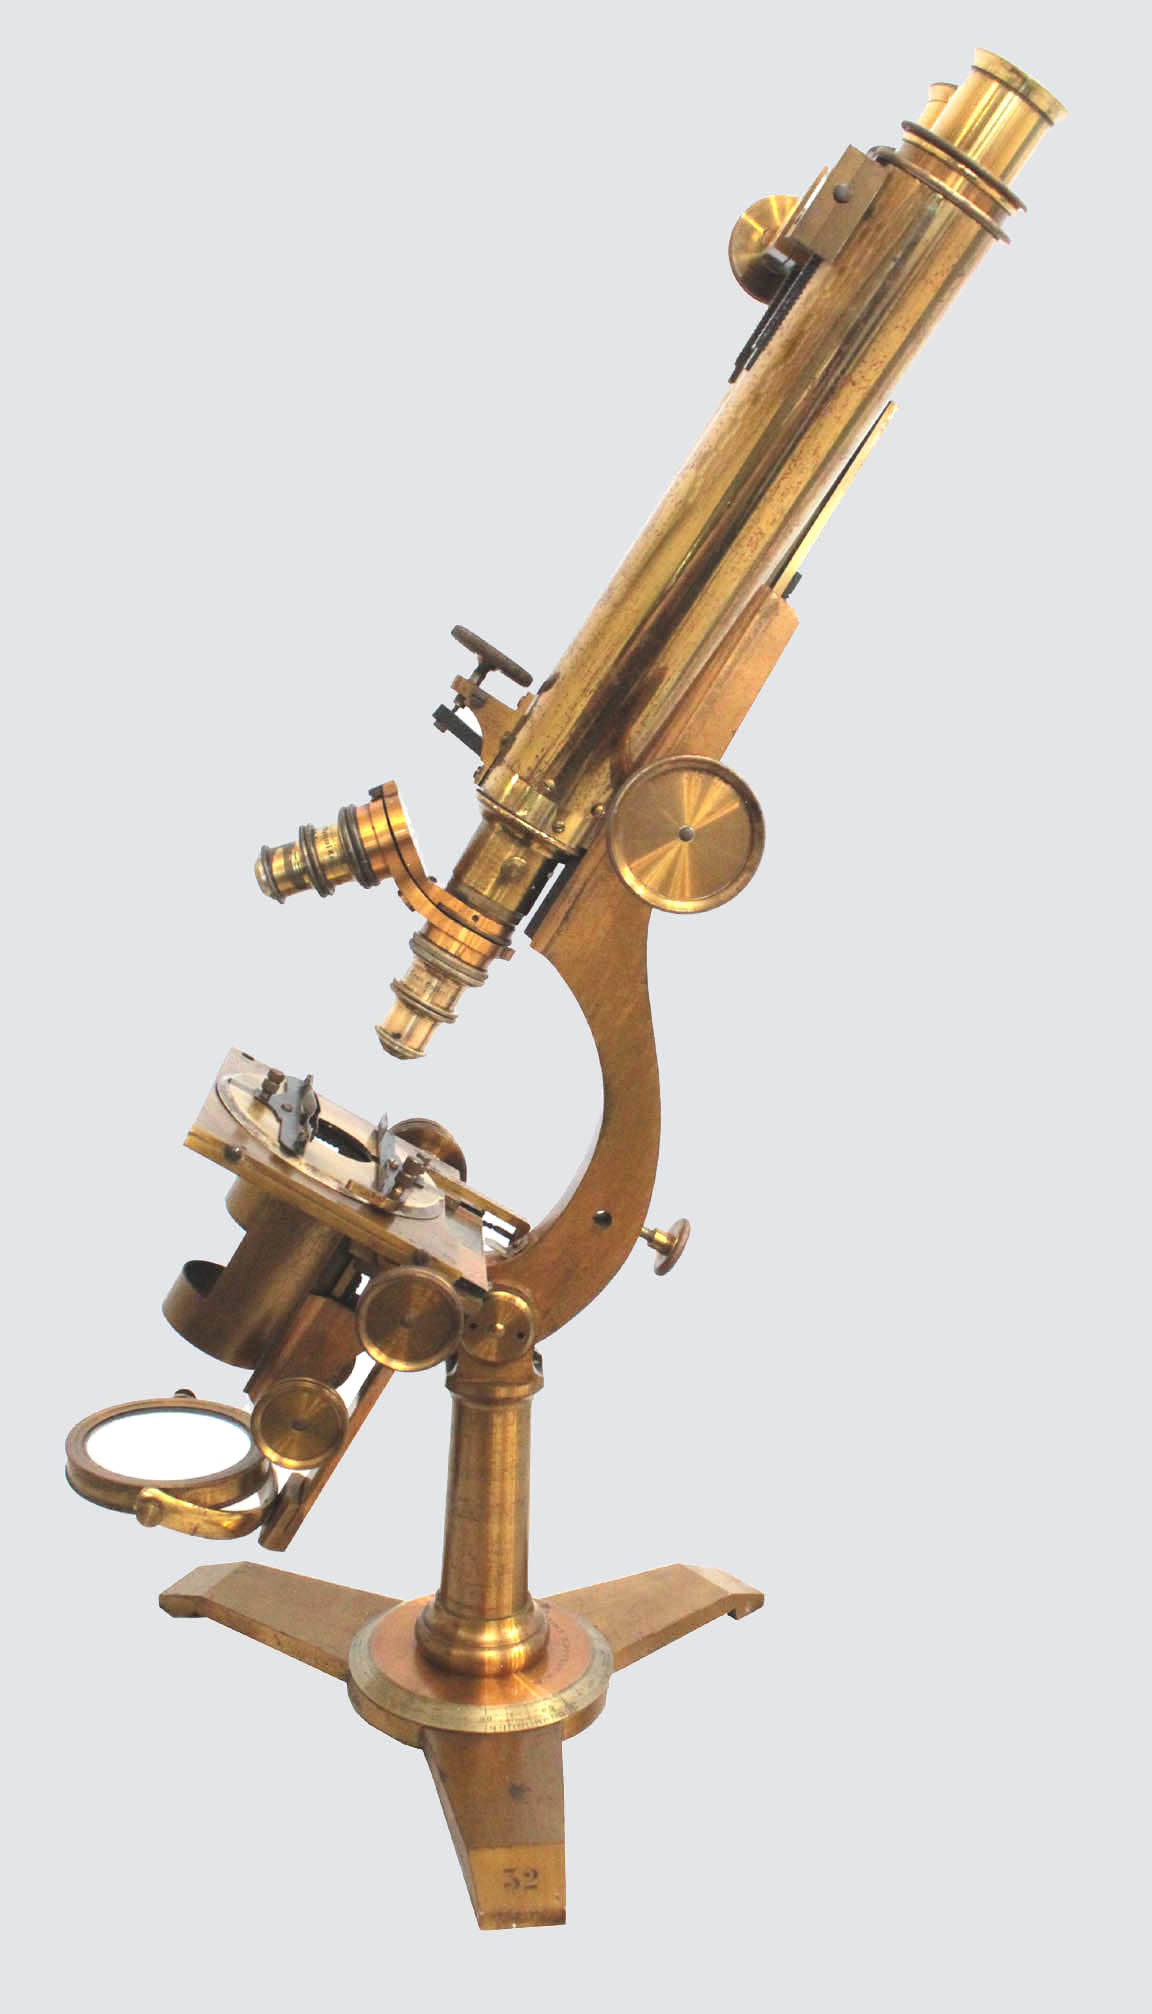 Bulloch microscope